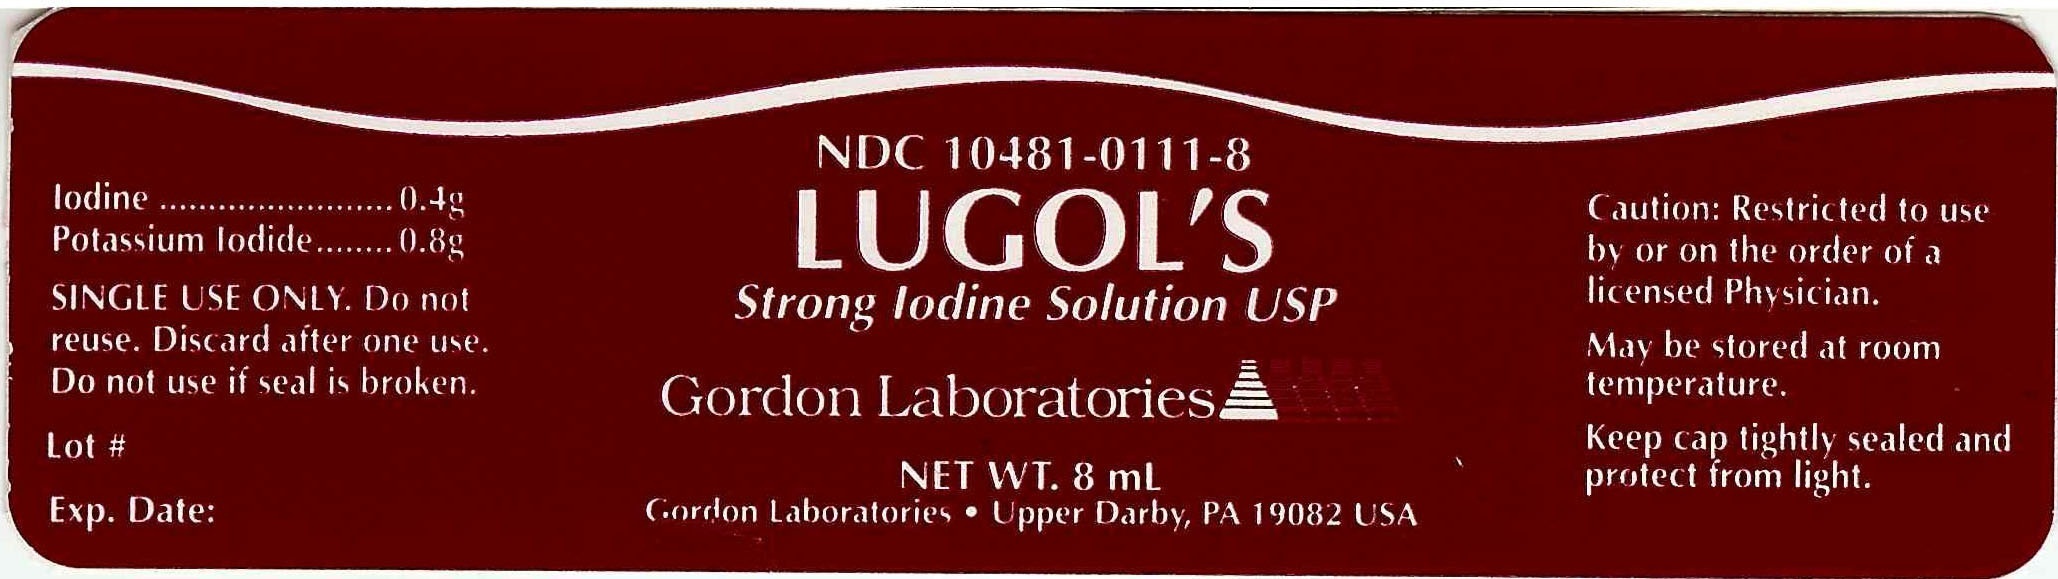 Image of Lugols Labels